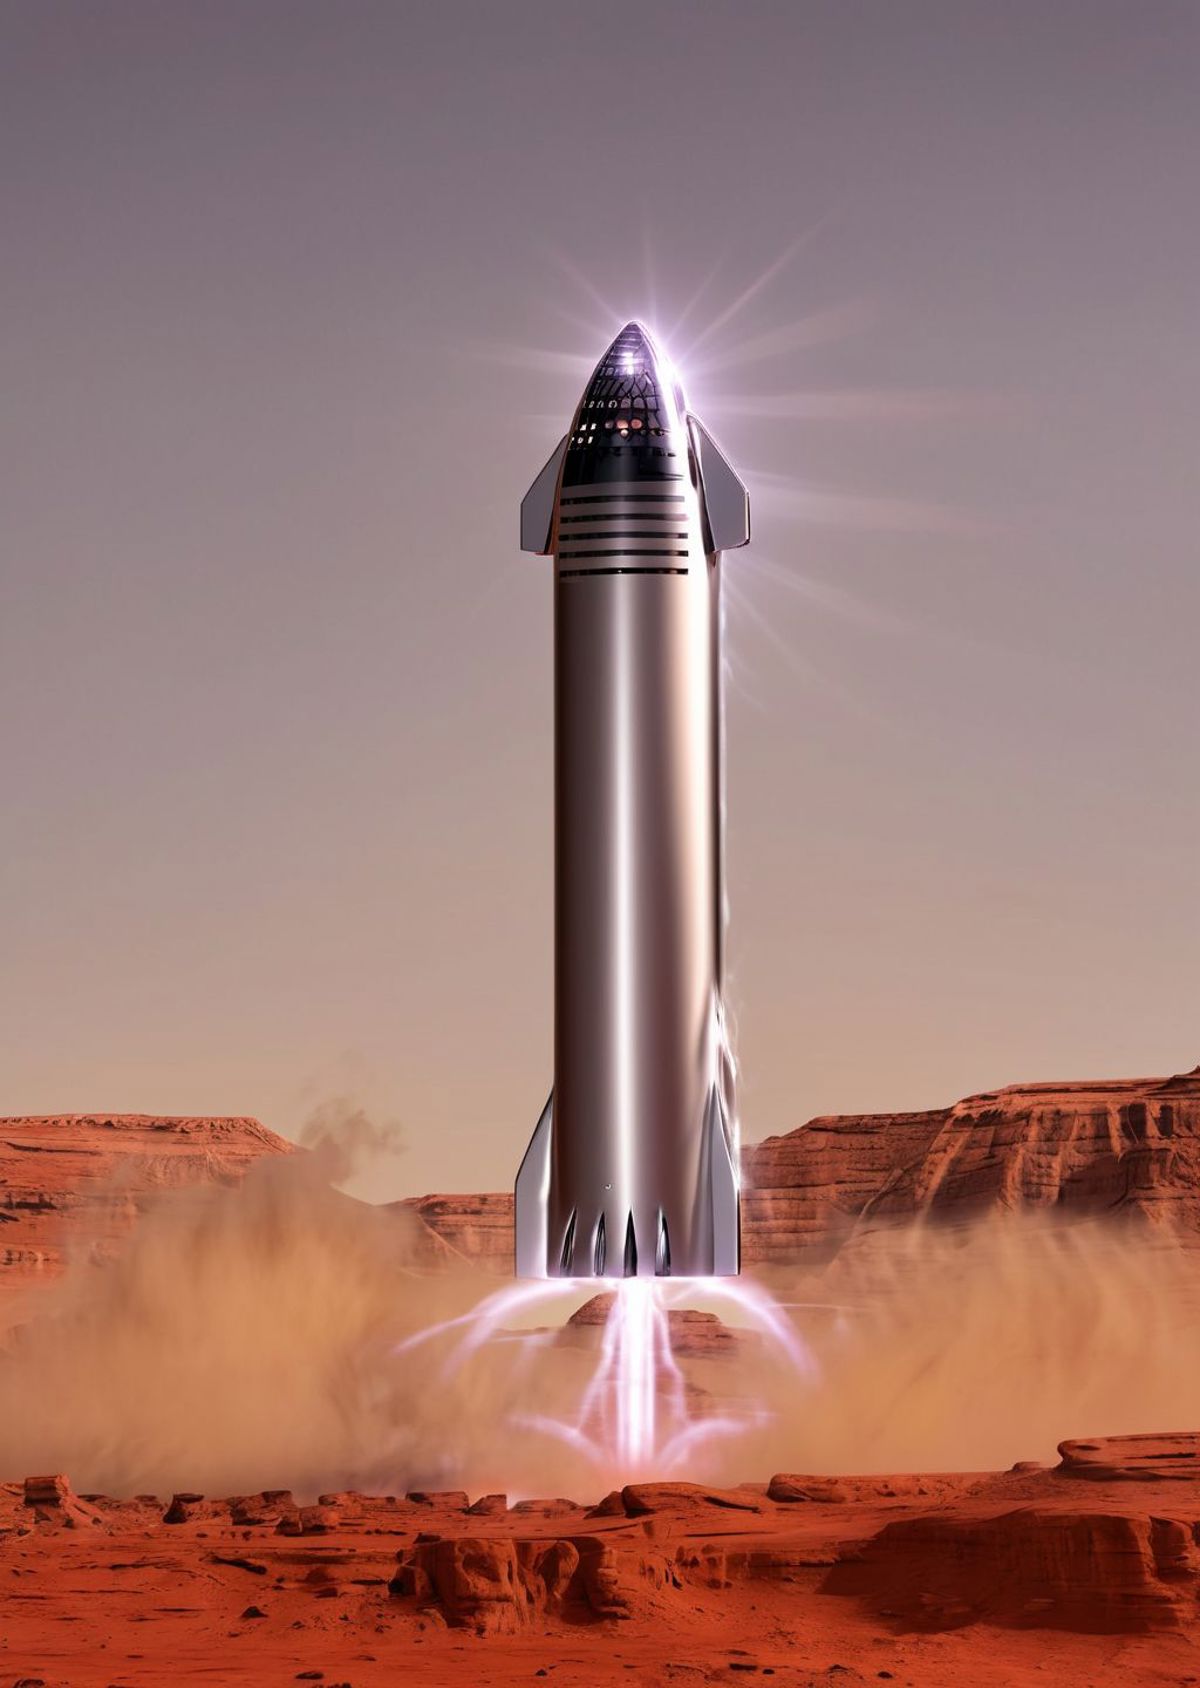 Starship - Interplanetary Transport Vehicle image by AshMartian